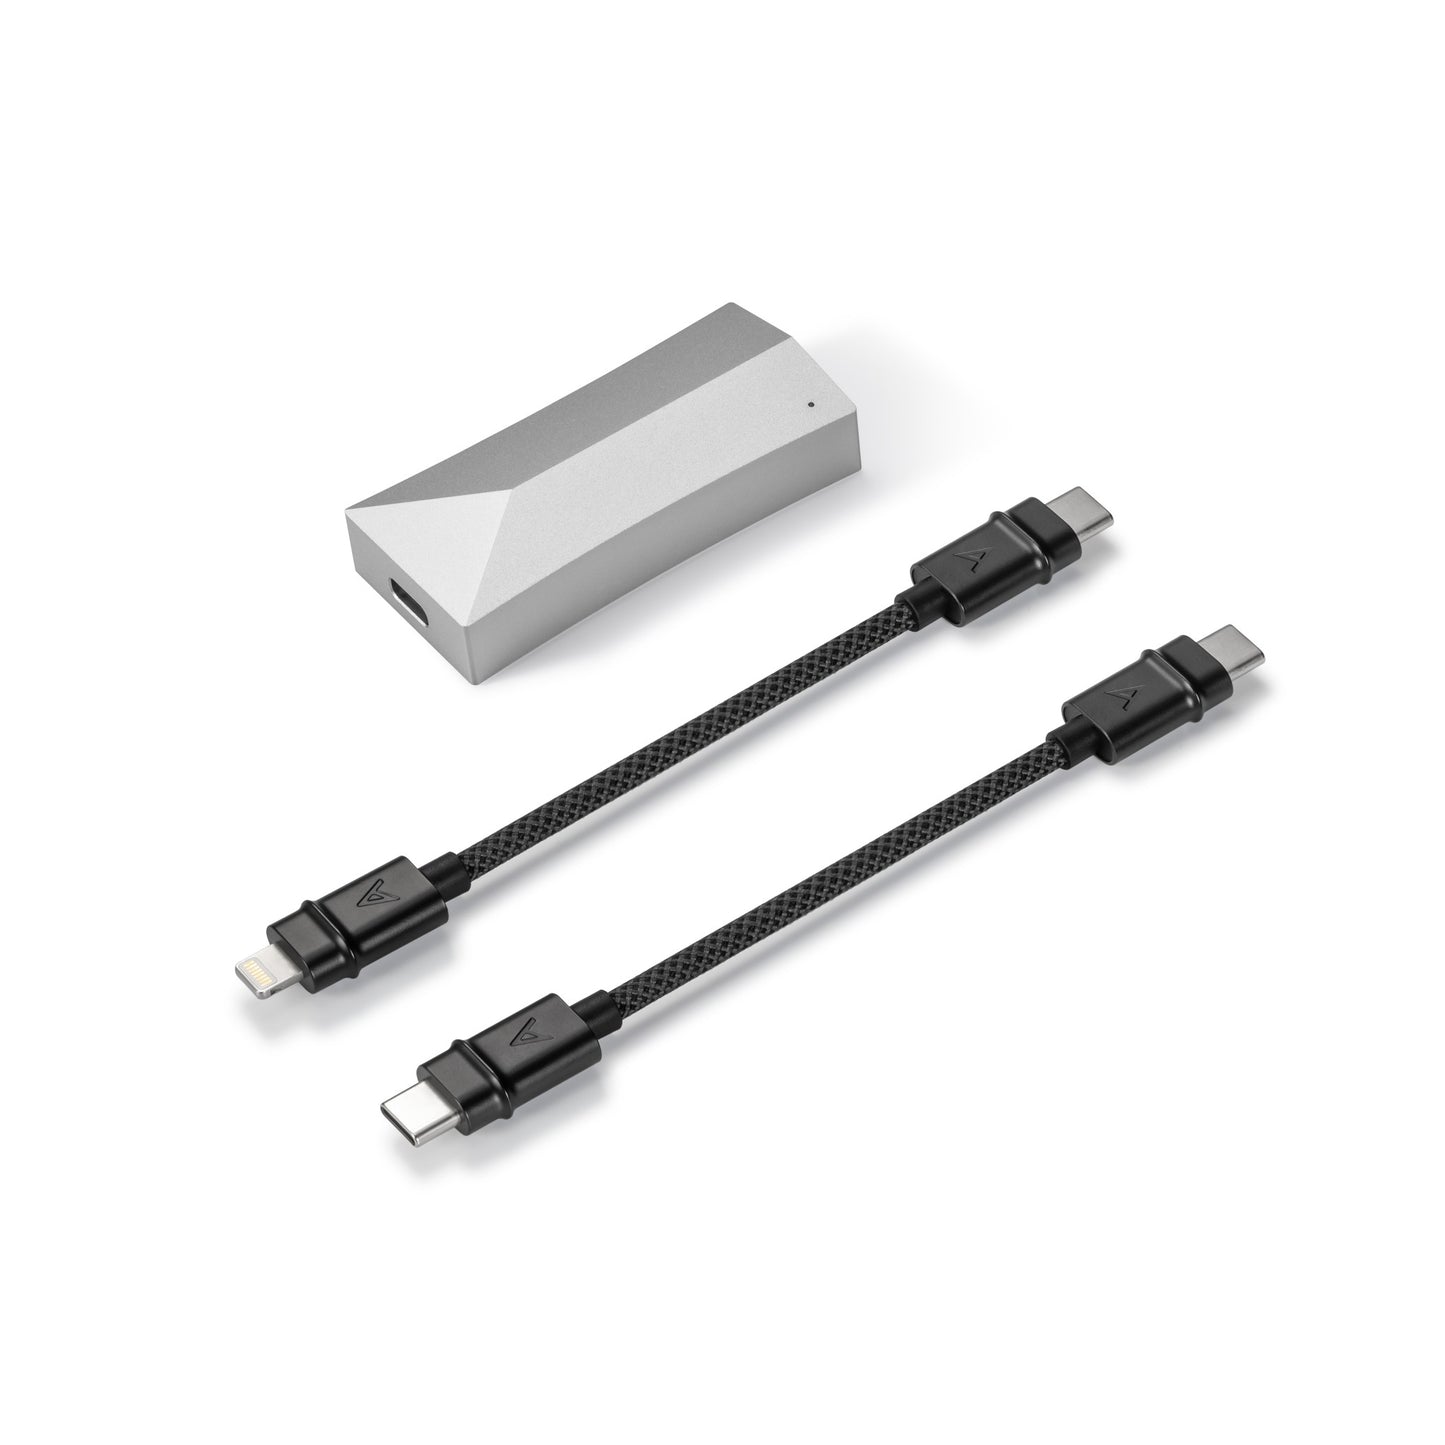 Astell Kern AK HC4 Hi-Fi DAC Adapter Cable Type C to 3.5mm 4.4mm Earphone